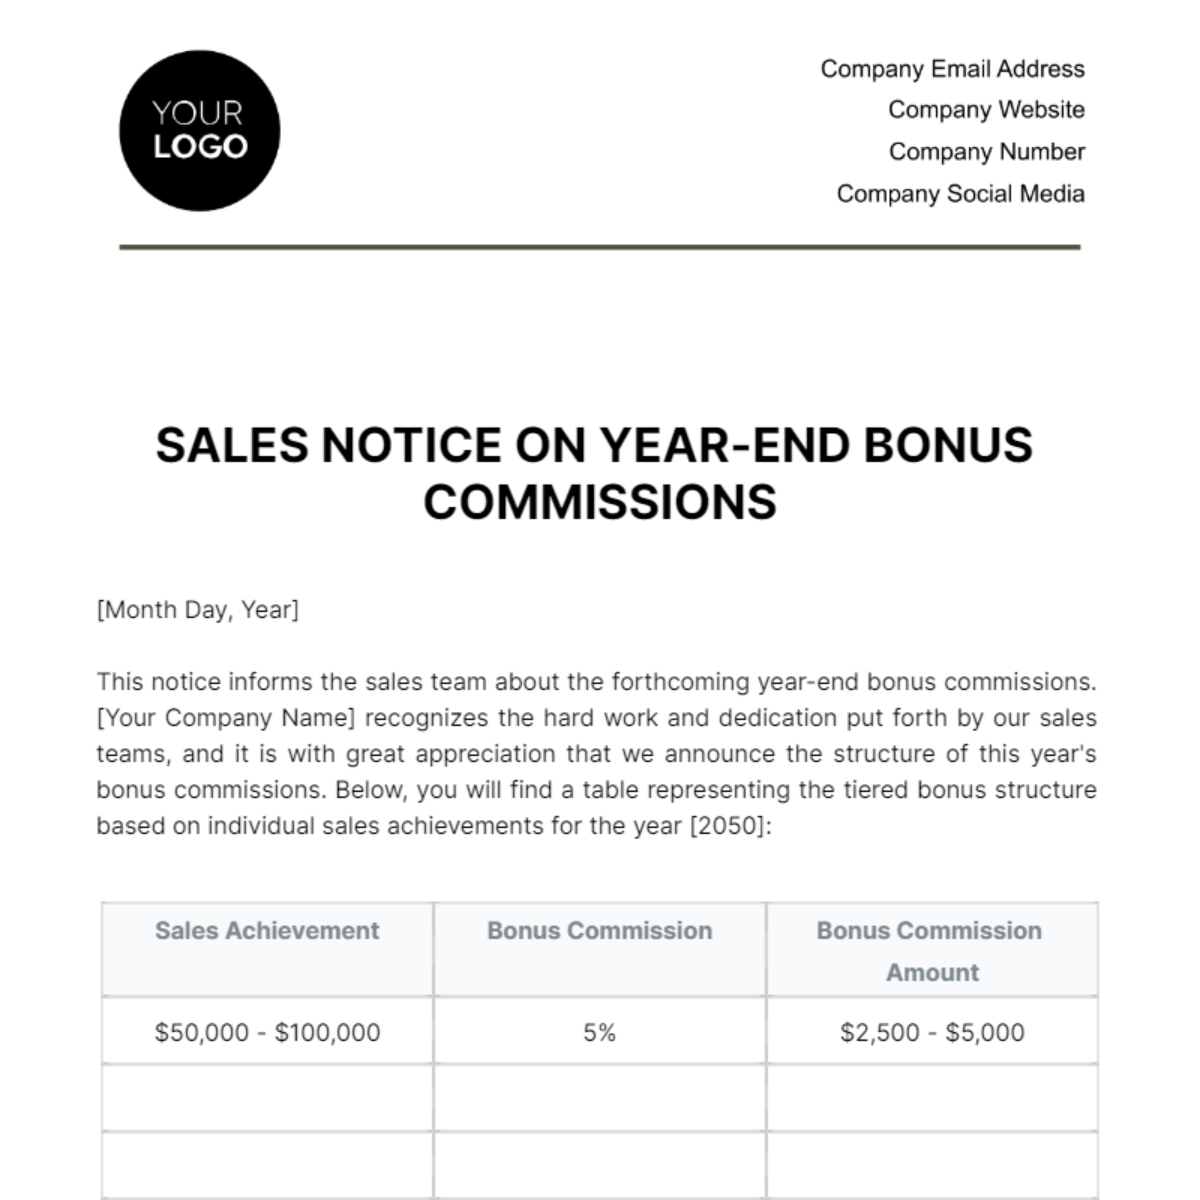 Sales Notice on Year-End Bonus Commissions Template